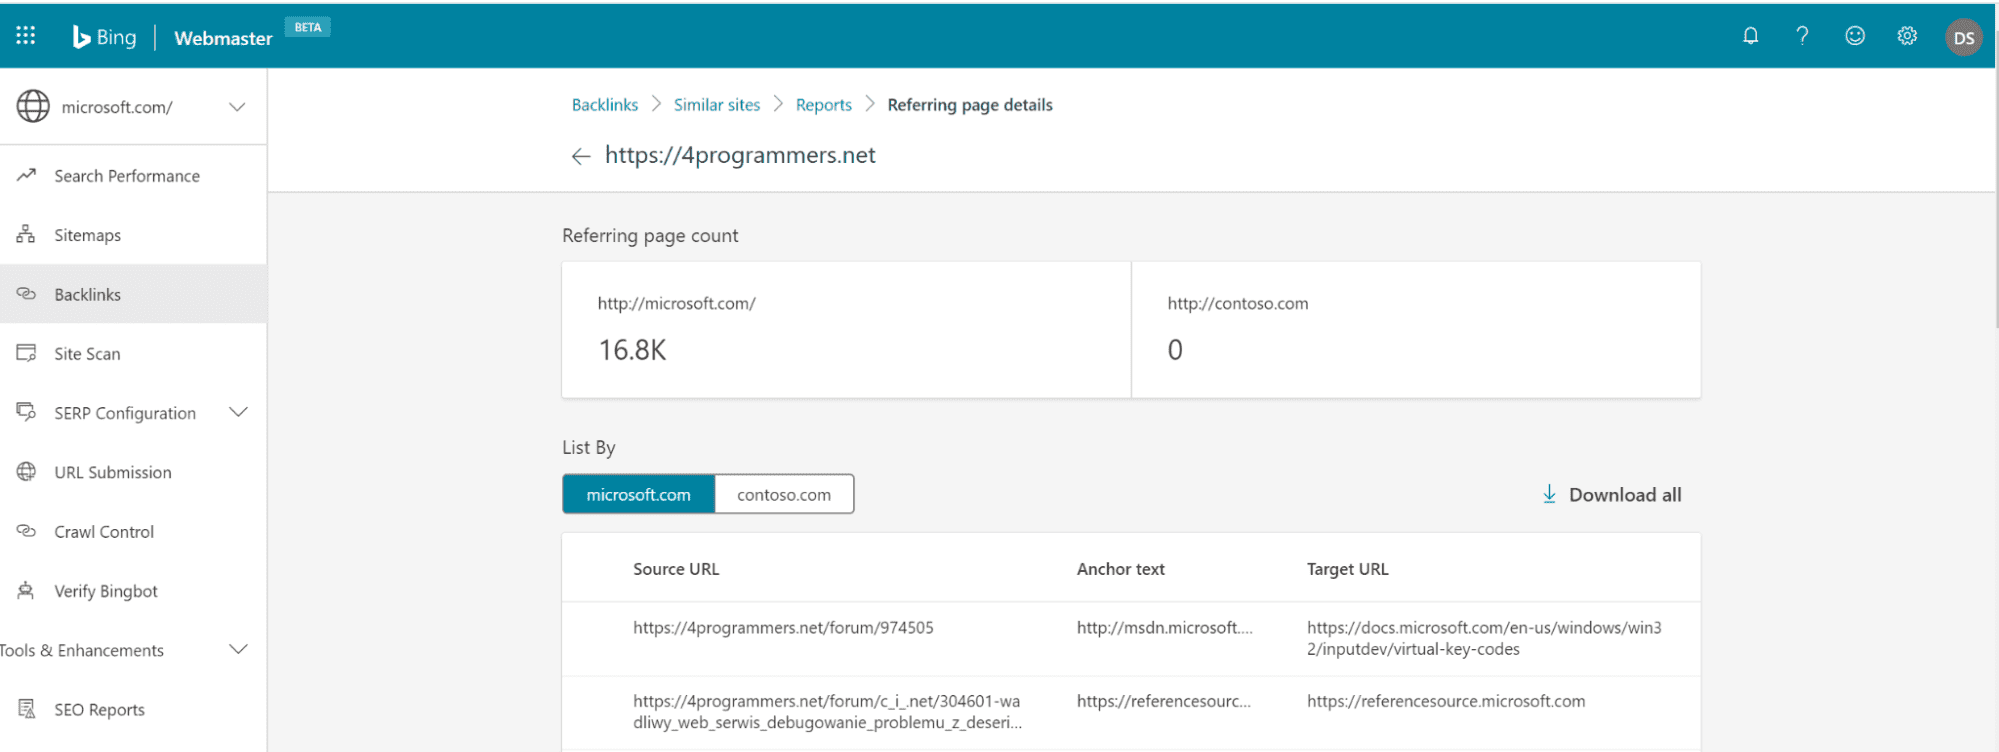 Bing webmaster tools backlinks report